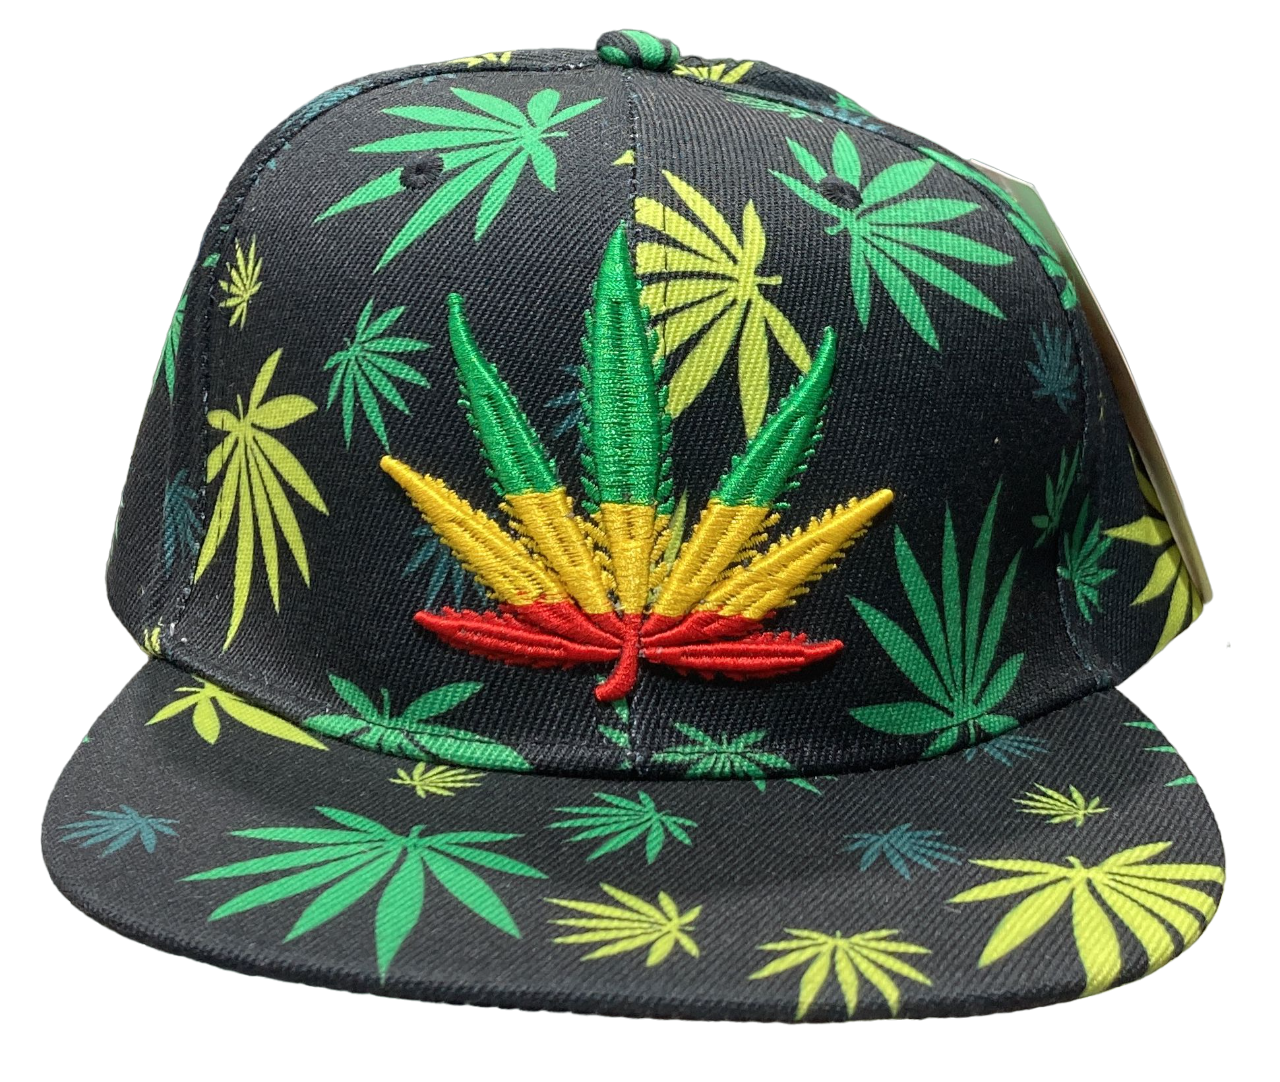 Adjustable Baseball Hat - Rasta Marijuana Patch (Black/Rasta) - MK Distro